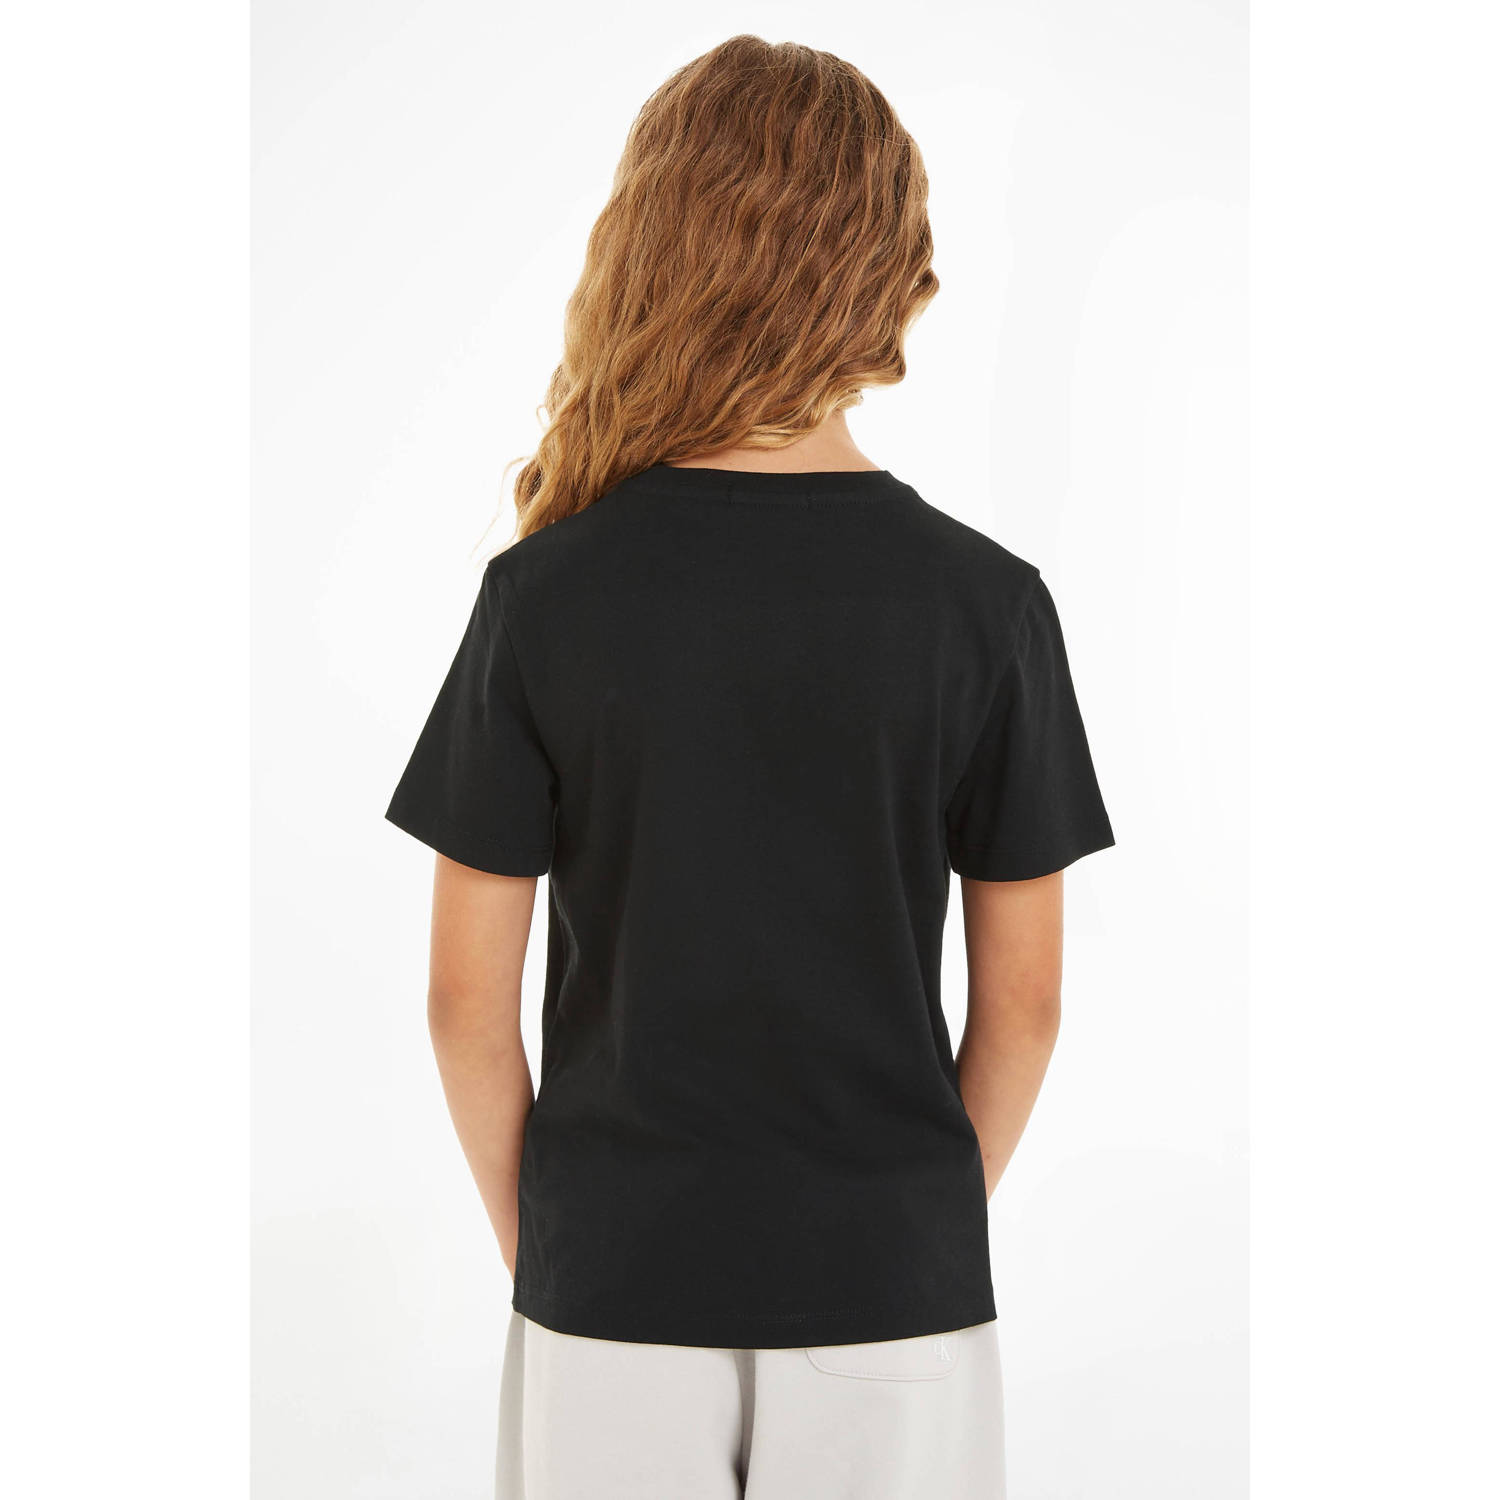 Calvin Klein T-shirt met tekst zwart